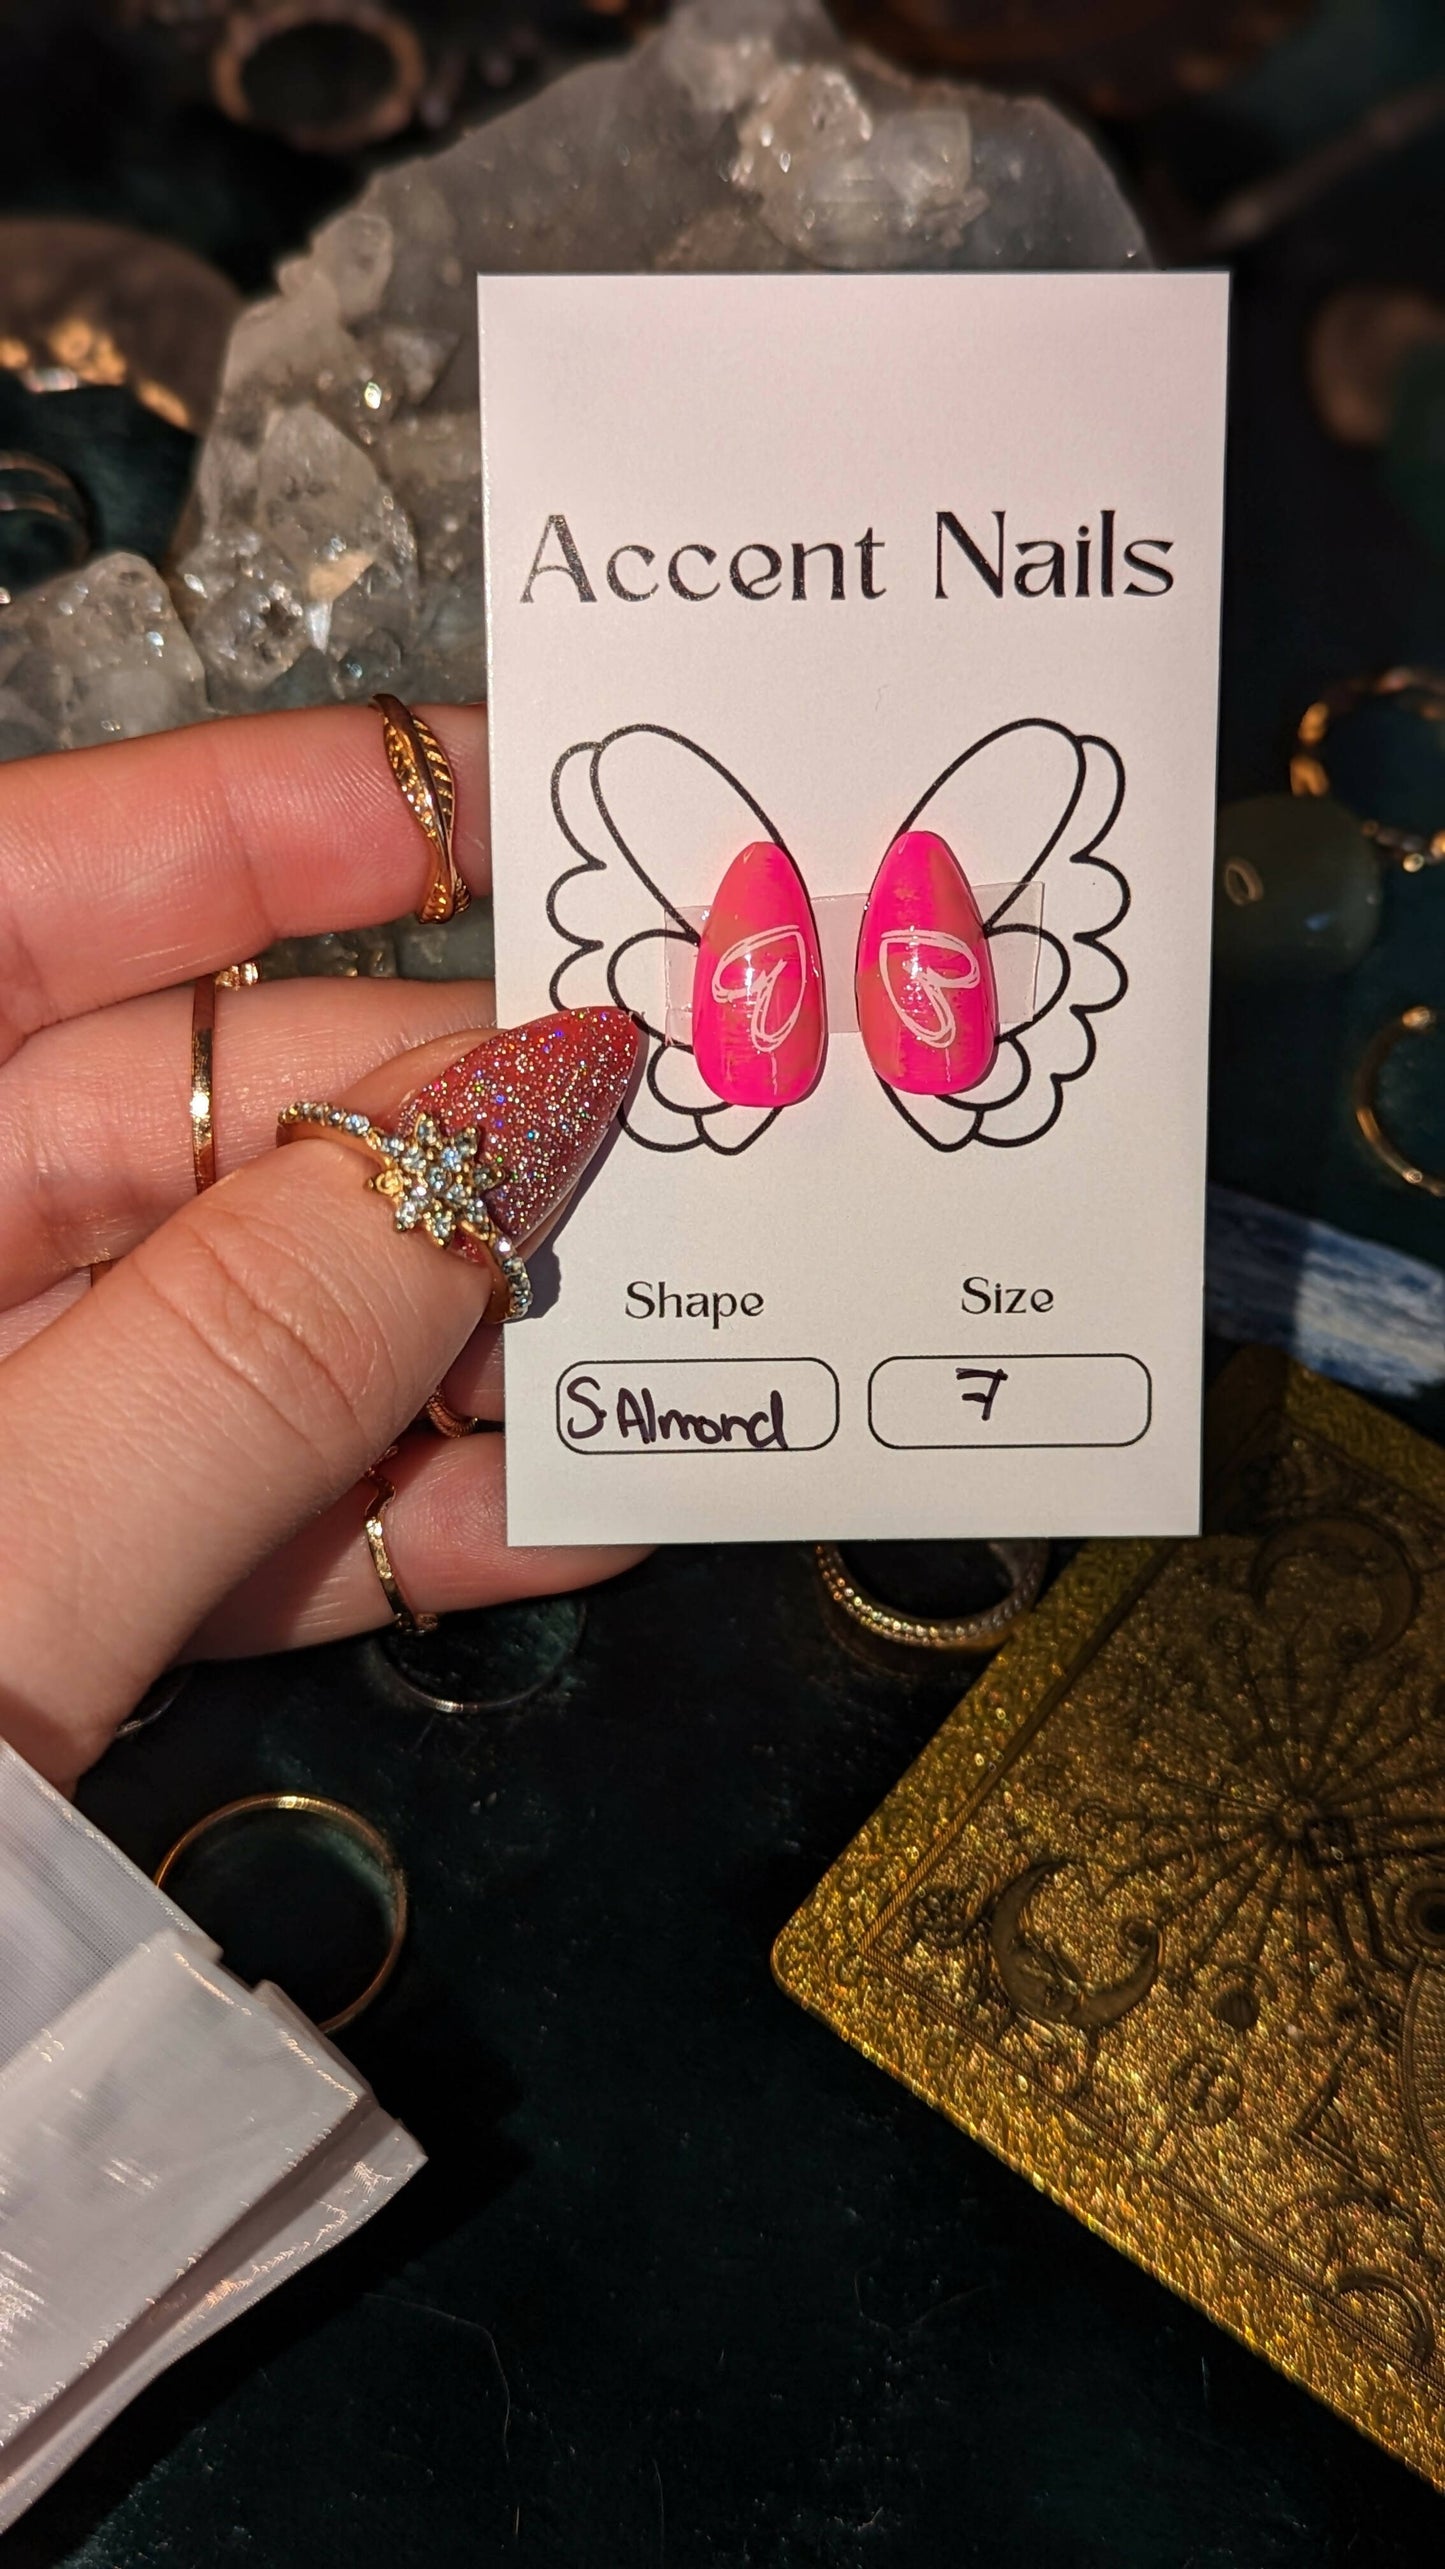 Accent Nails: doodle hearts - Size 7